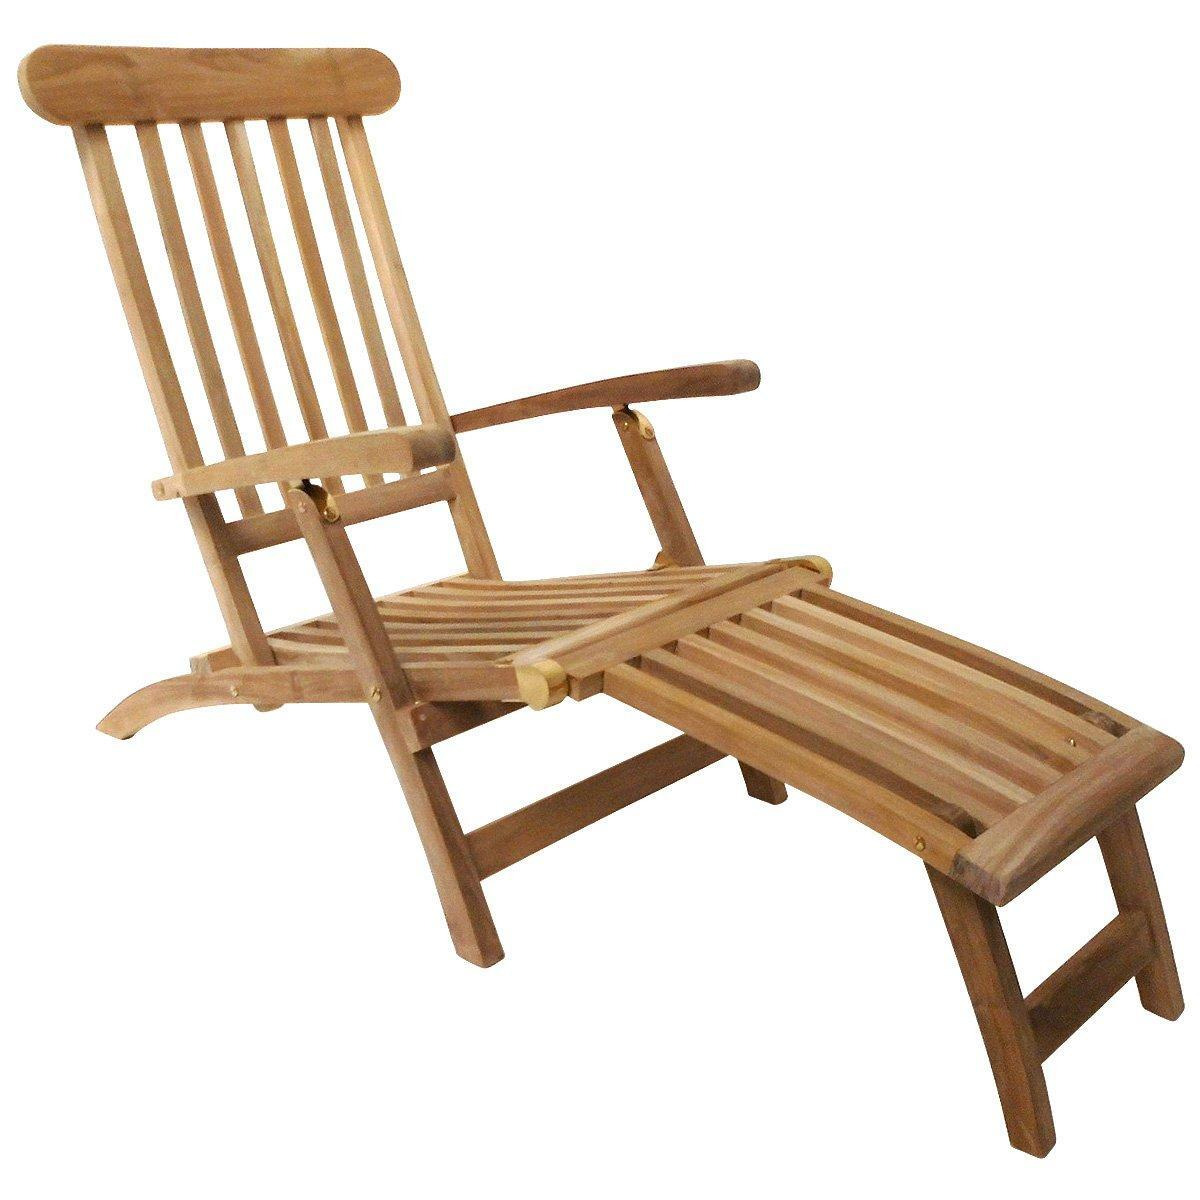 Solid Wooden Teak Steamer Chair/Sun Lounger Garden Furniture - image 1